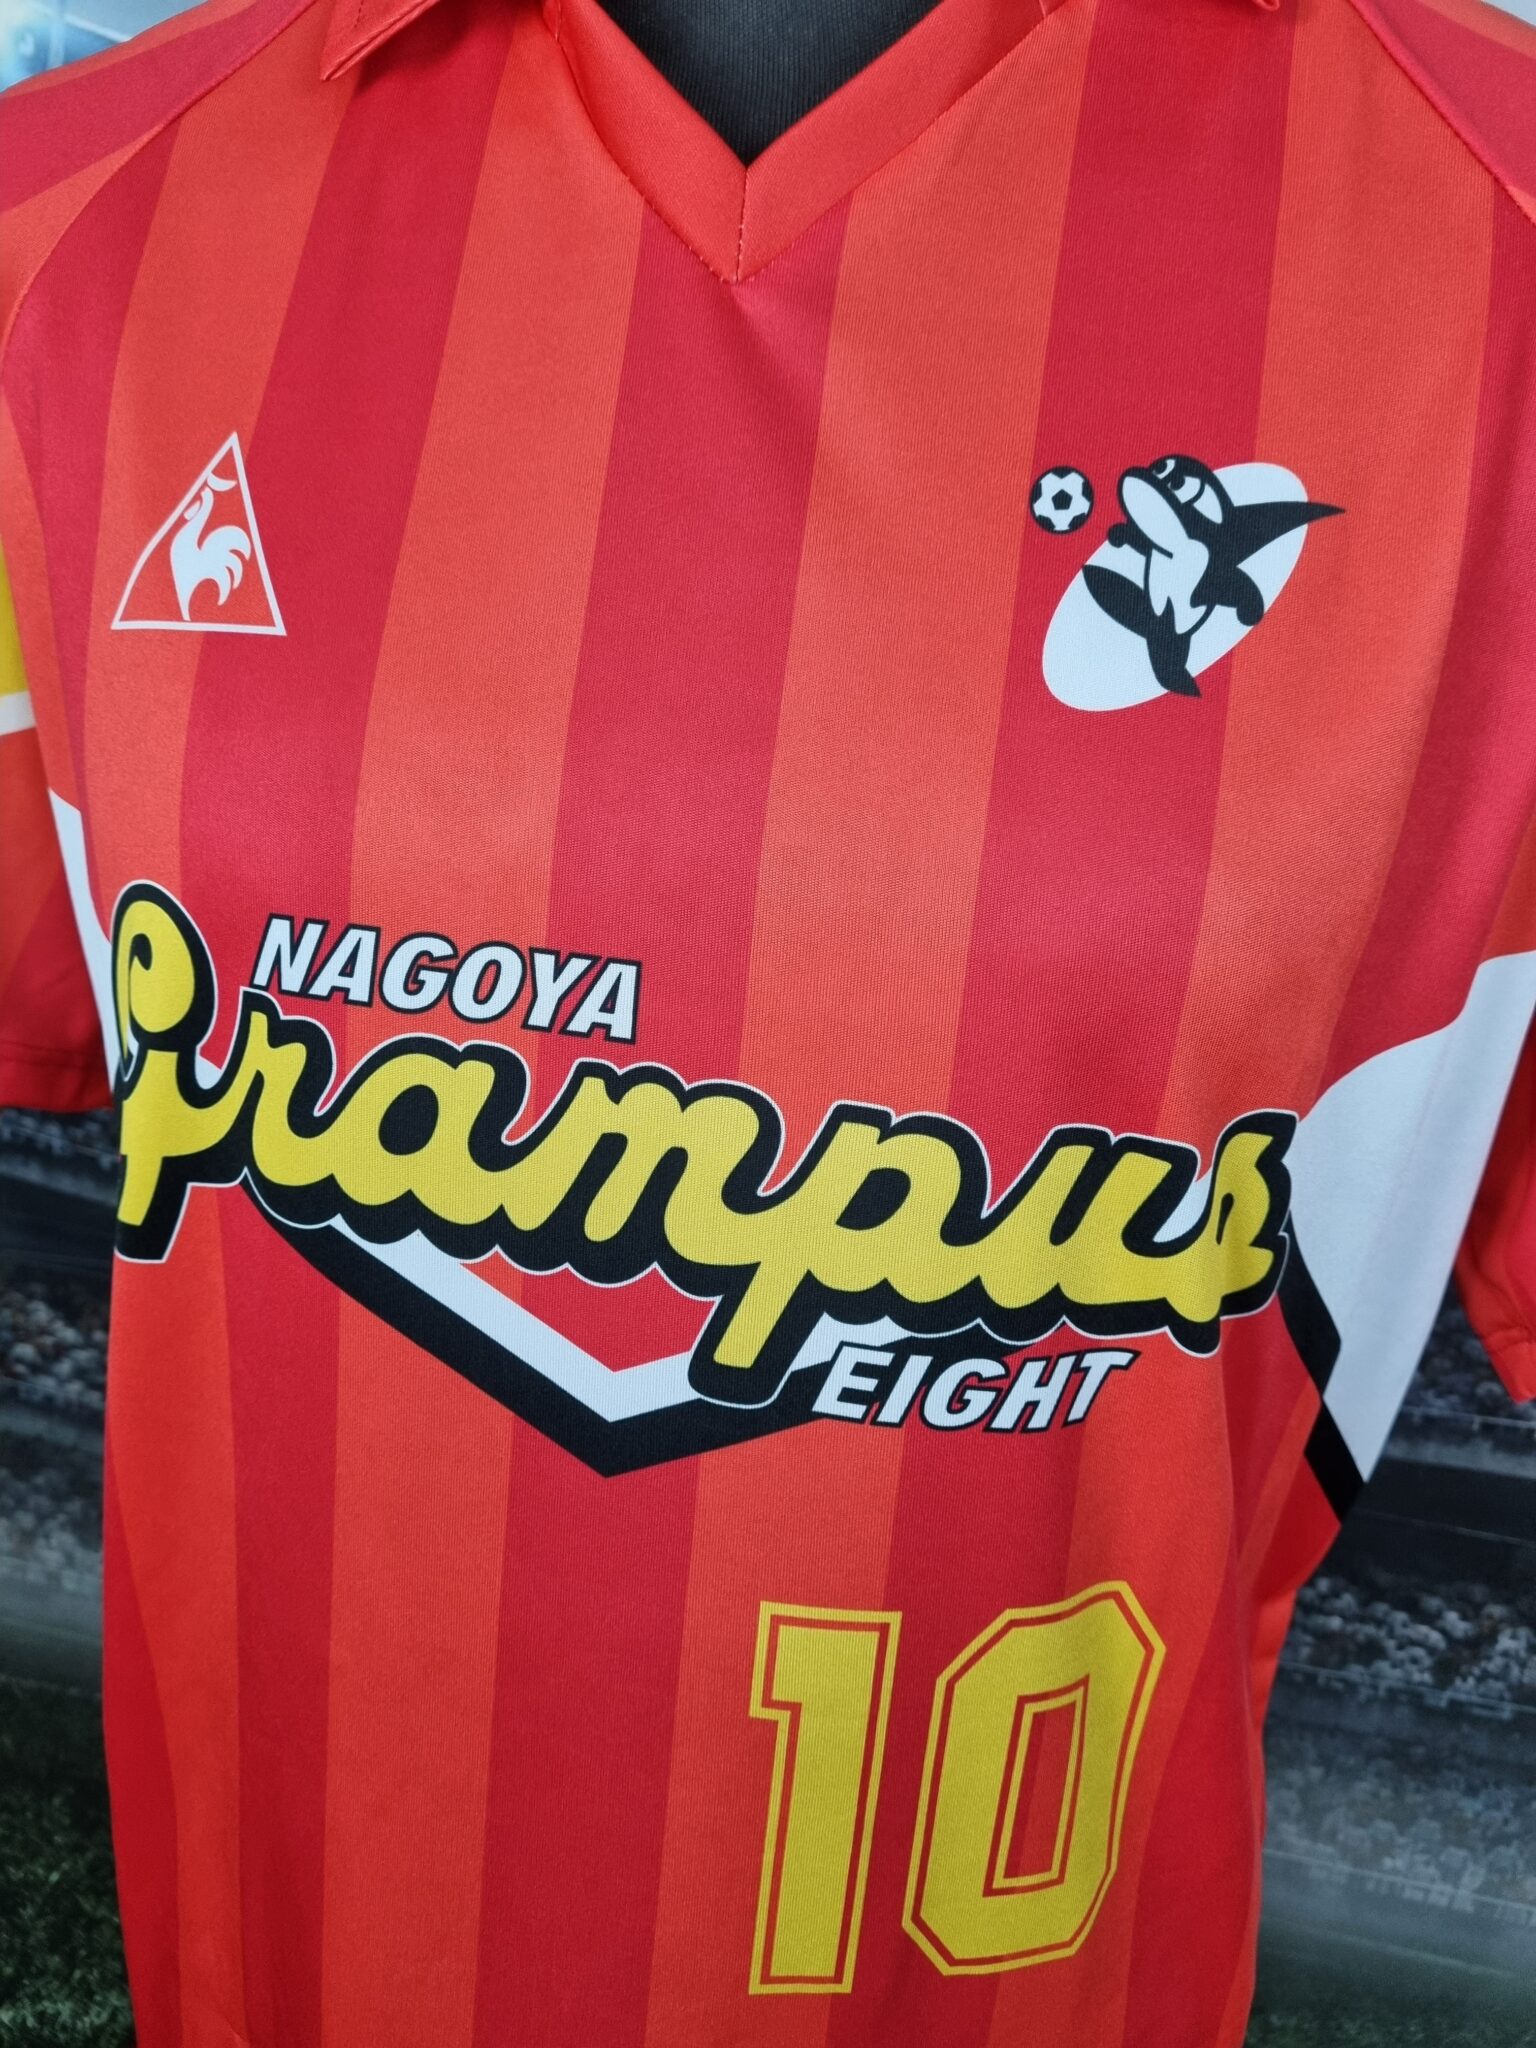 Nagoya Grampus Eight 1992/1994 Home Football Shirt Lineker #10 Japan England Soccer Jersey - Sport Club Memories